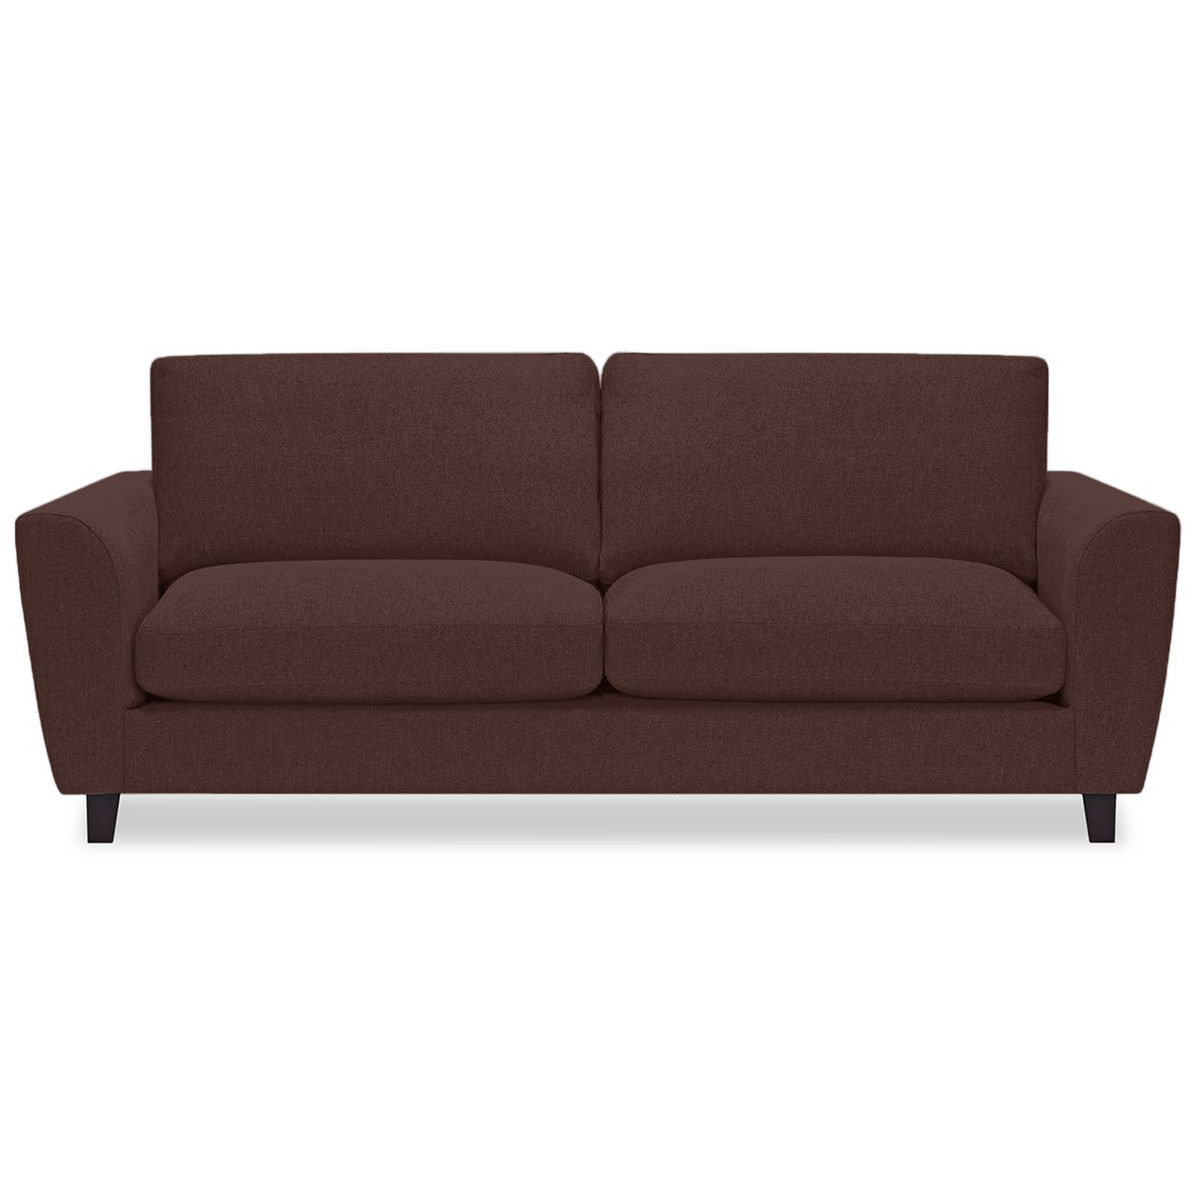 Bari 3 Seater Sofa, burgundy - image 1